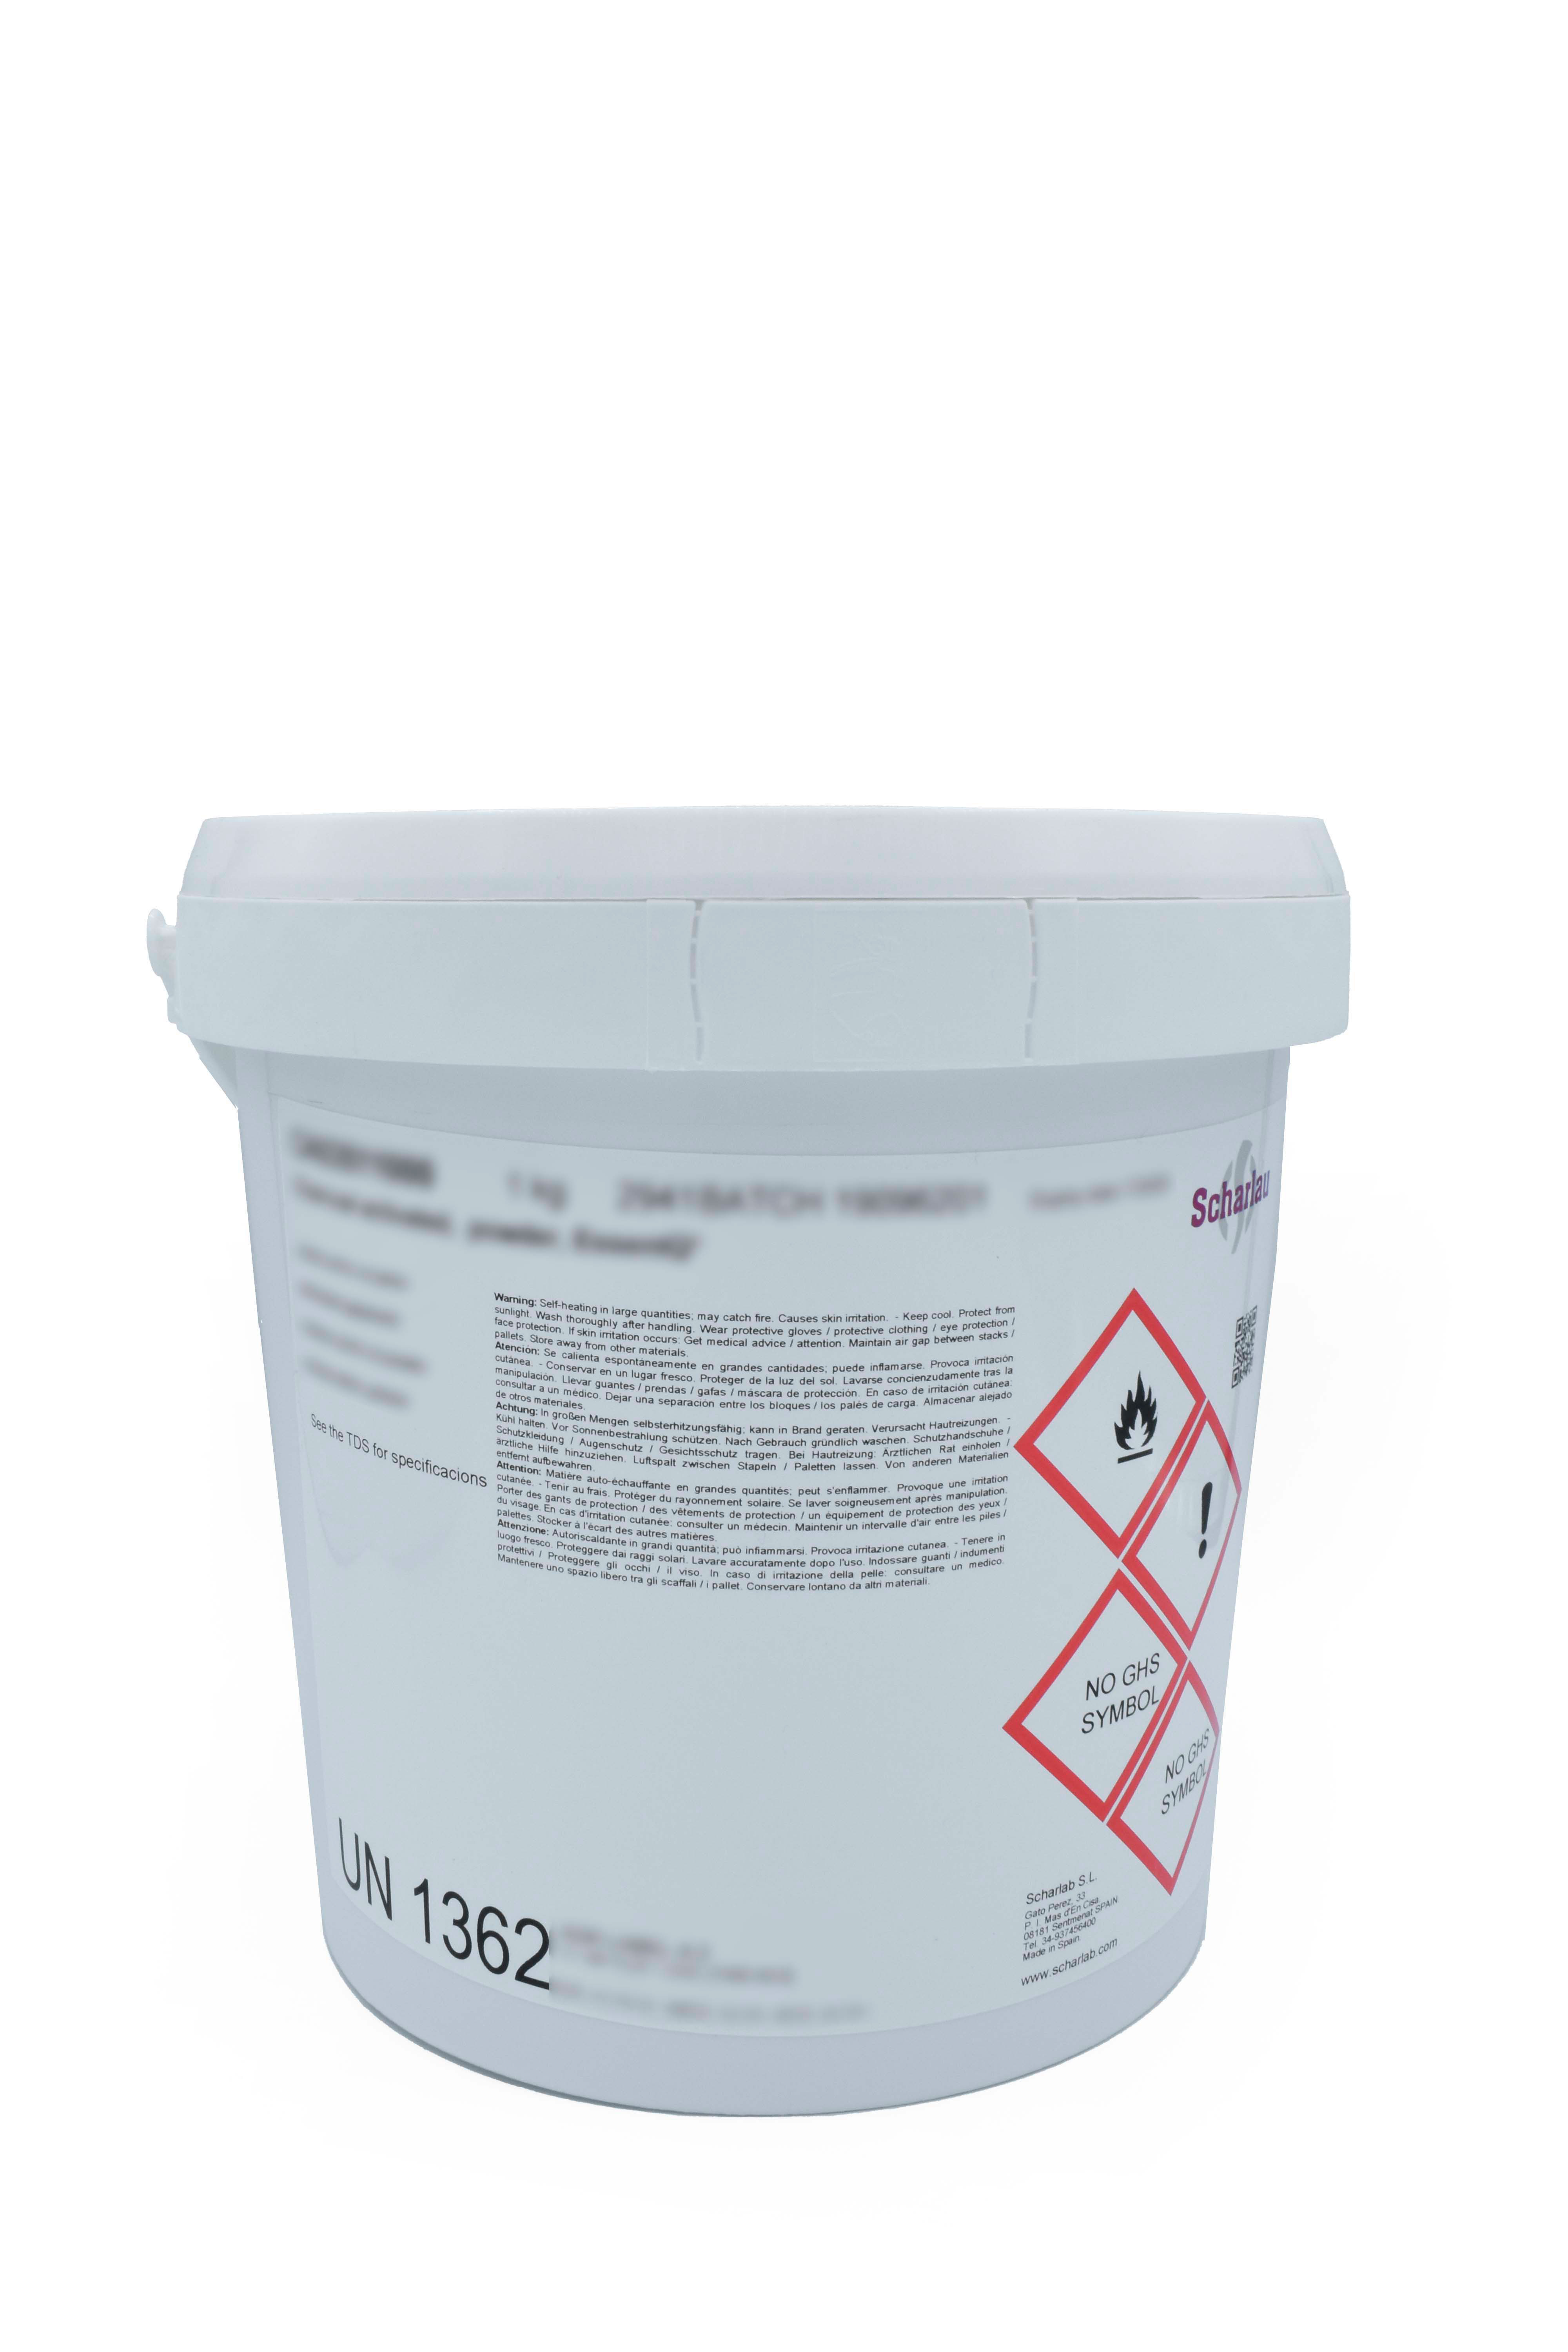 Sodio idrogenocarbonato, purissimo, Pharmpur®, Ph Eur, BP, USP